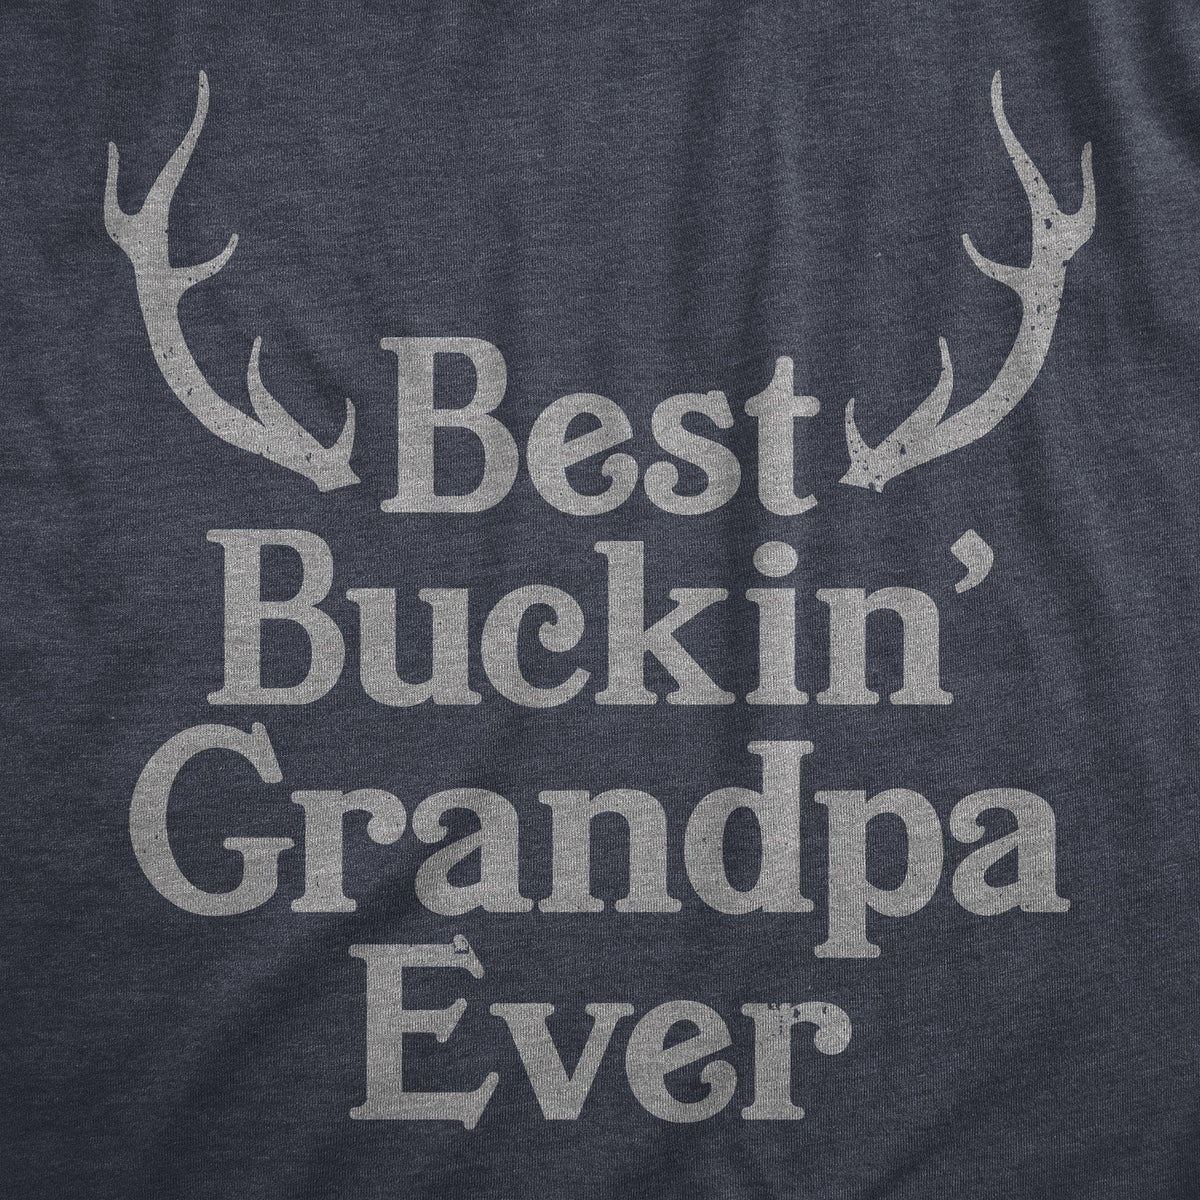 Best Buckin&#39; Grandpa Men&#39;s Tshirt - Crazy Dog T-Shirts